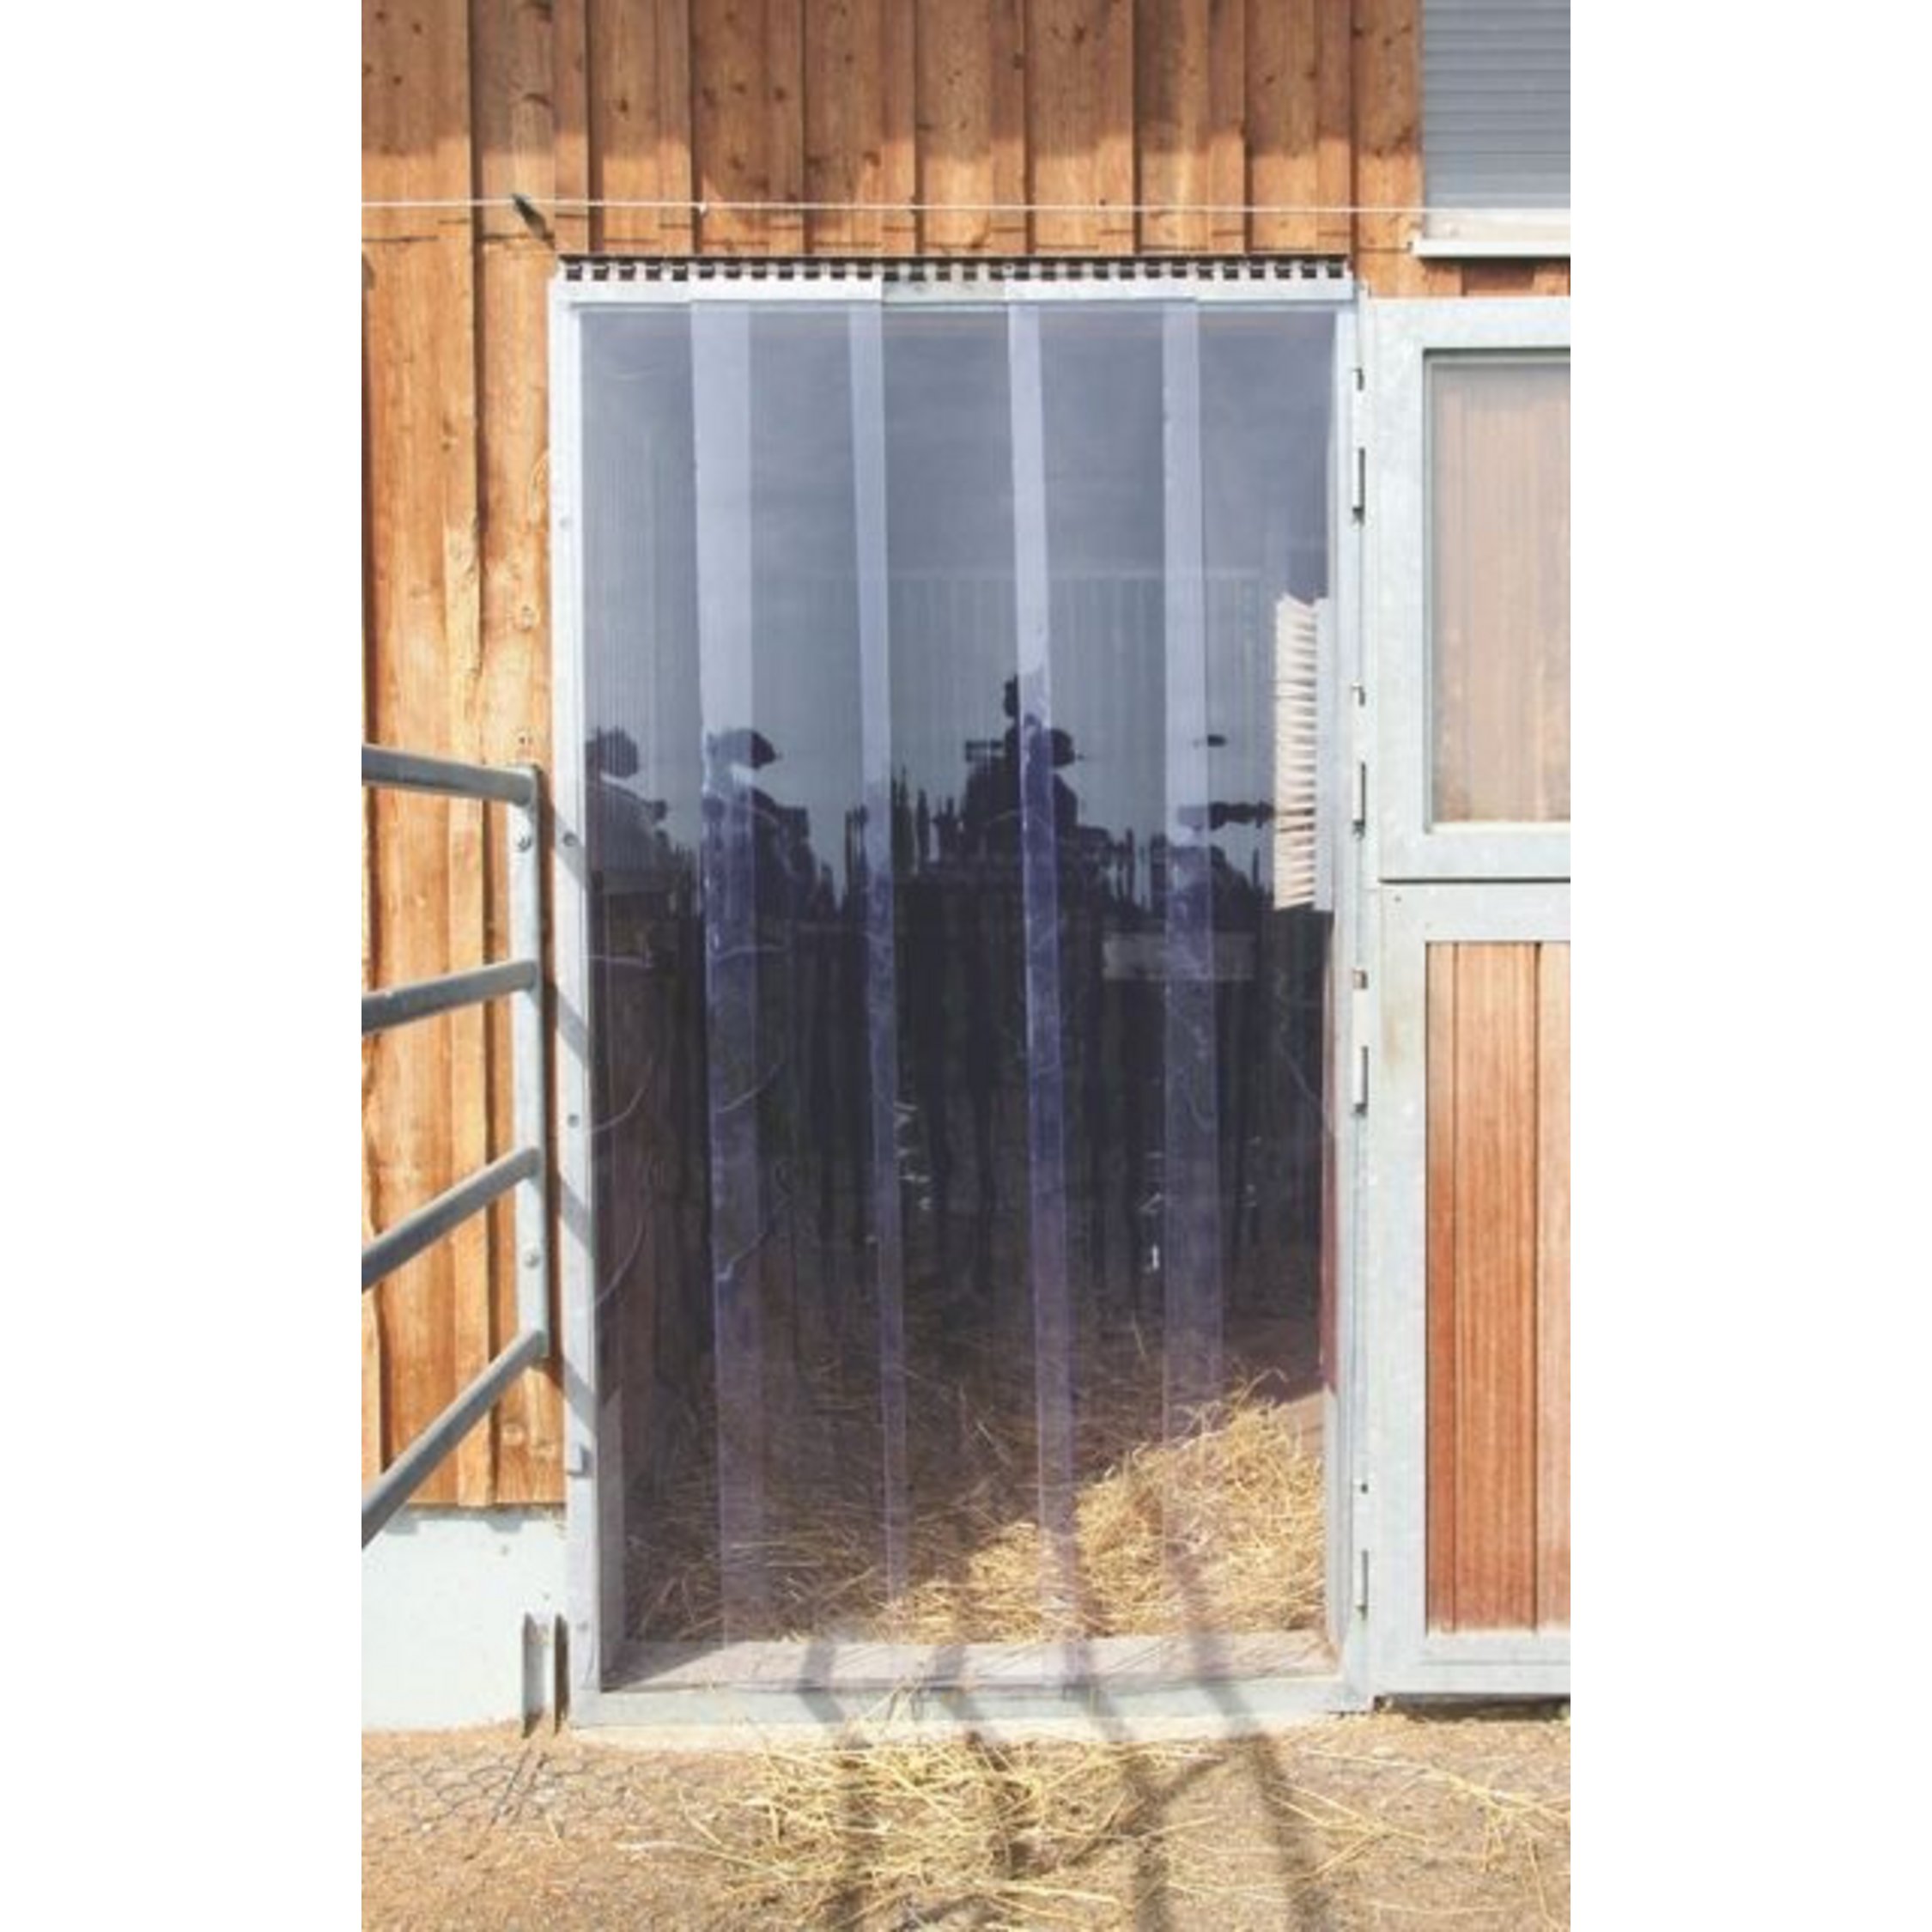 25 m 30 cm Breite x 3 mm Dicke PVC Lamellen Streifenvorhang Türvorhang klar